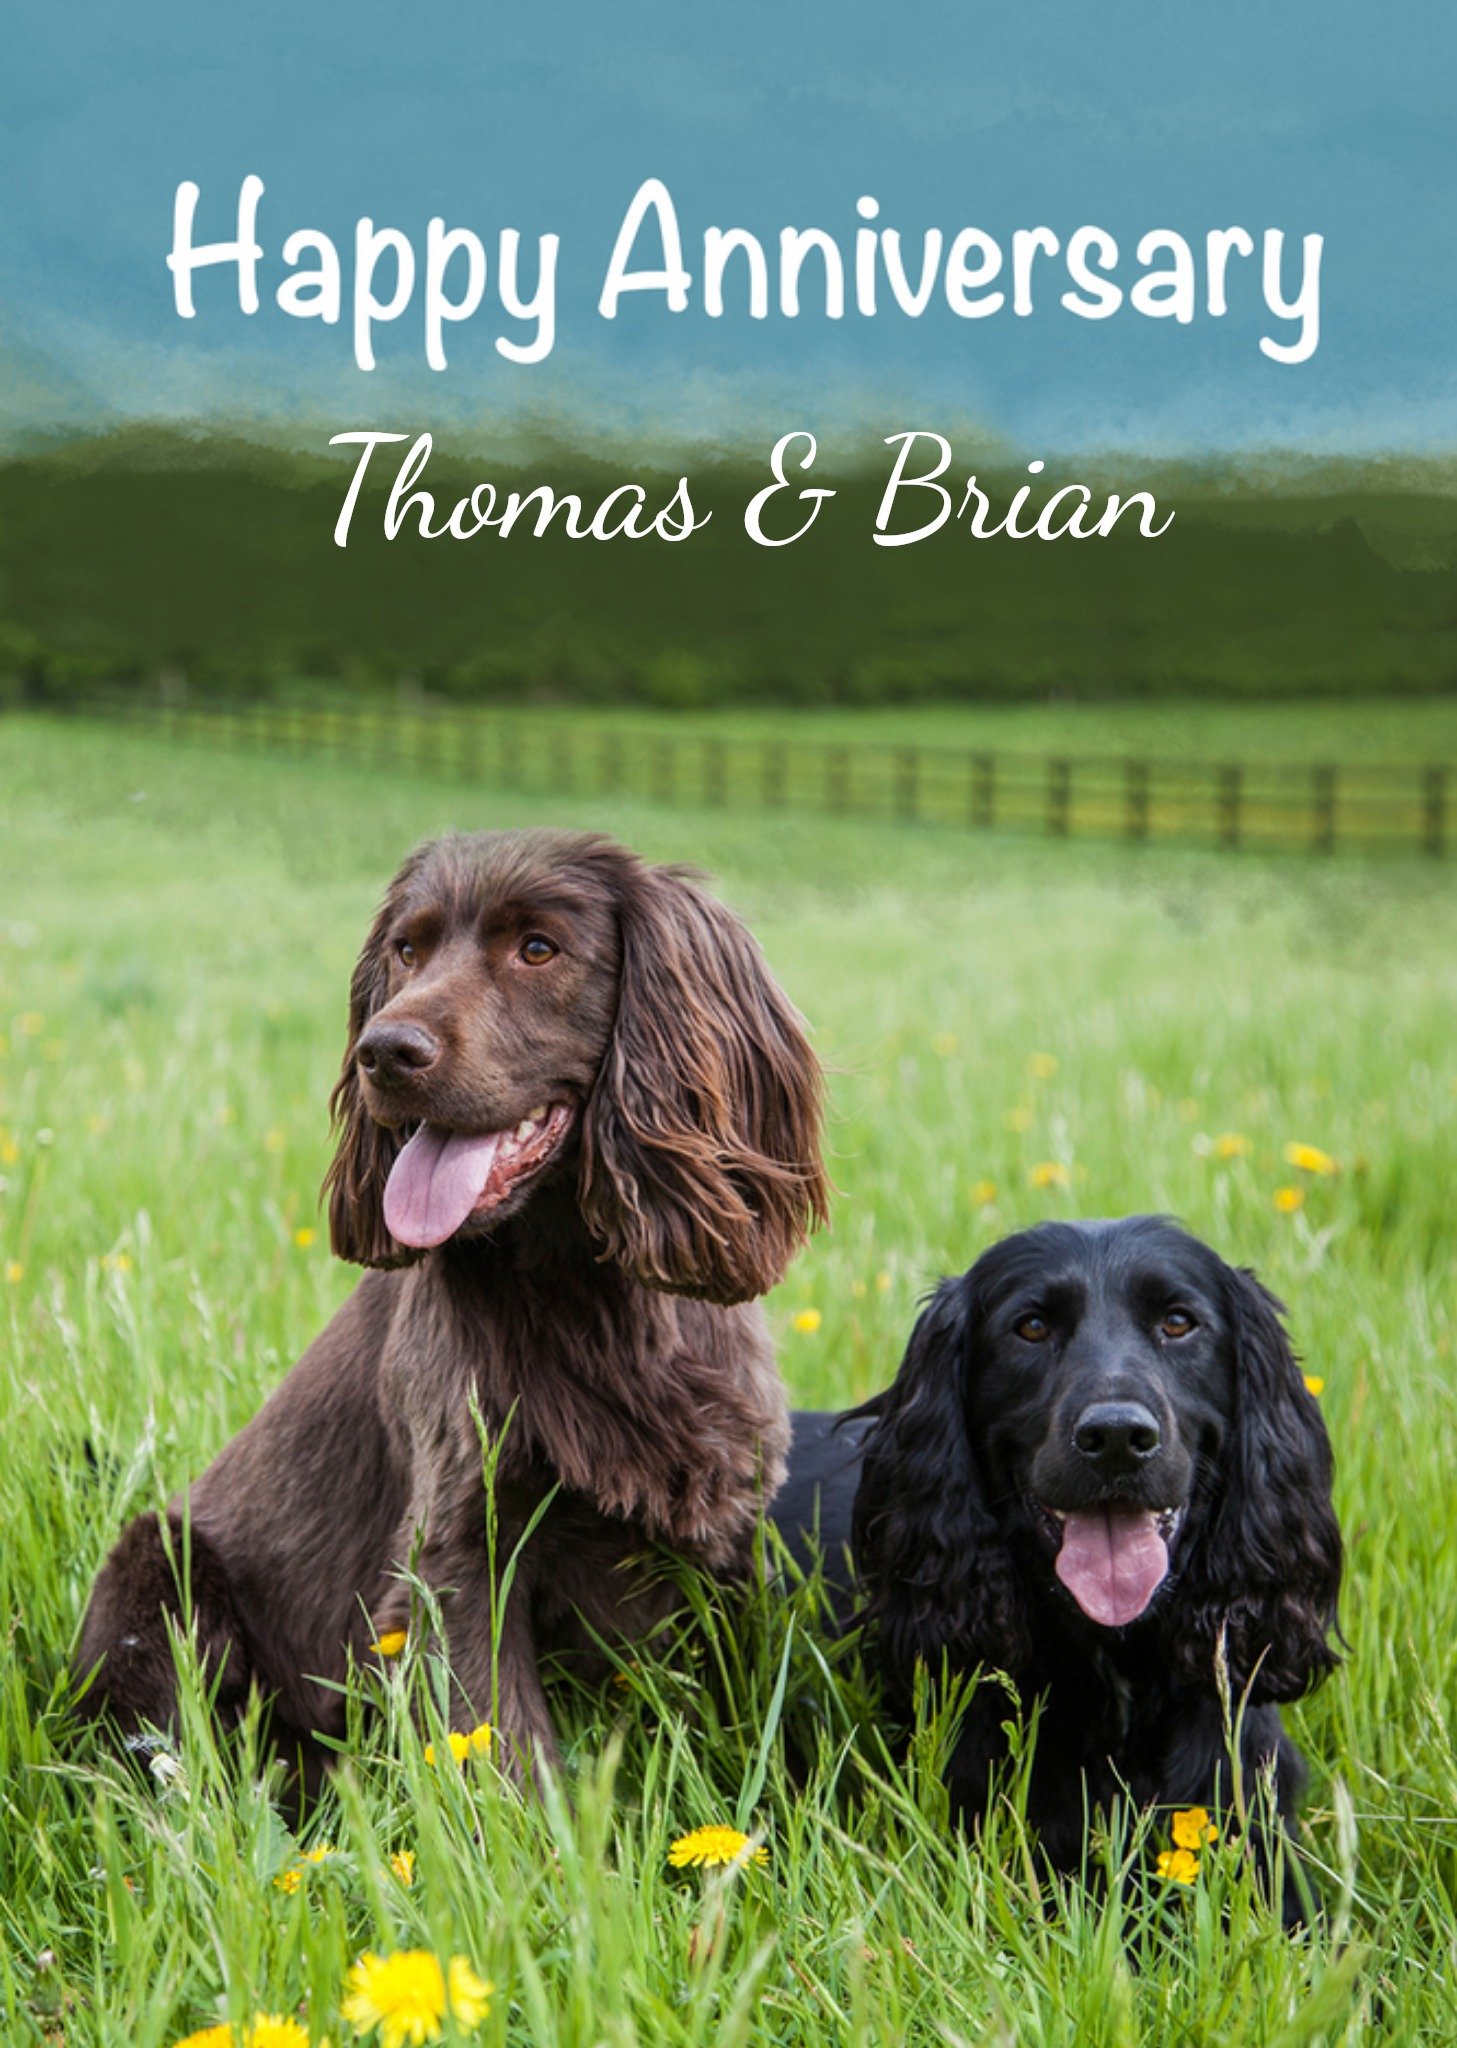 Moonpig Alex Sharp Photography Spaniel Dogs In The Grass Anniversary Card Ecard